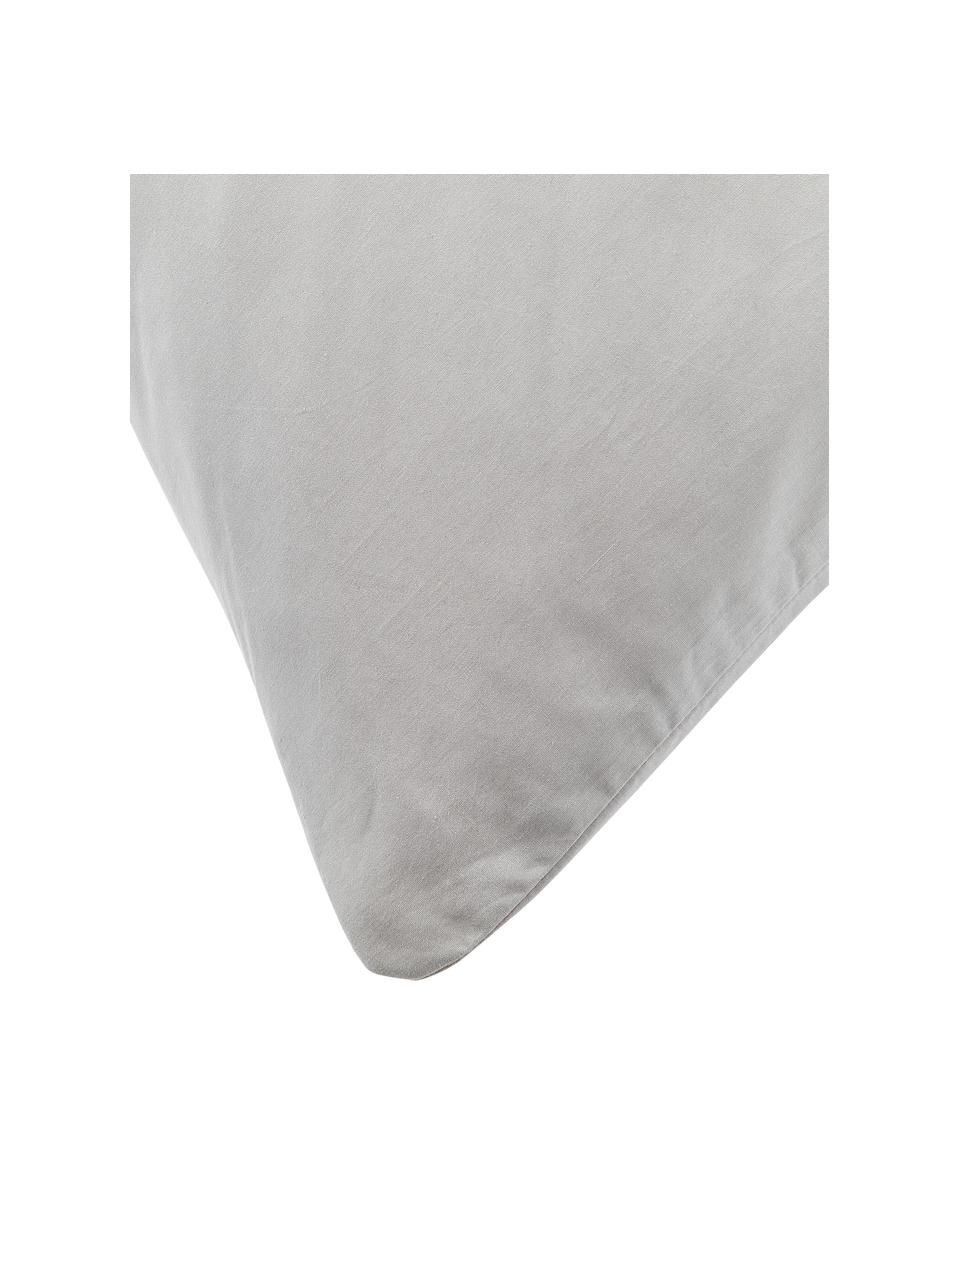 Federa in cotone percalle grigio con trapuntatura origami Bordy, Grigio, Larg. 50 x Lung. 80 cm